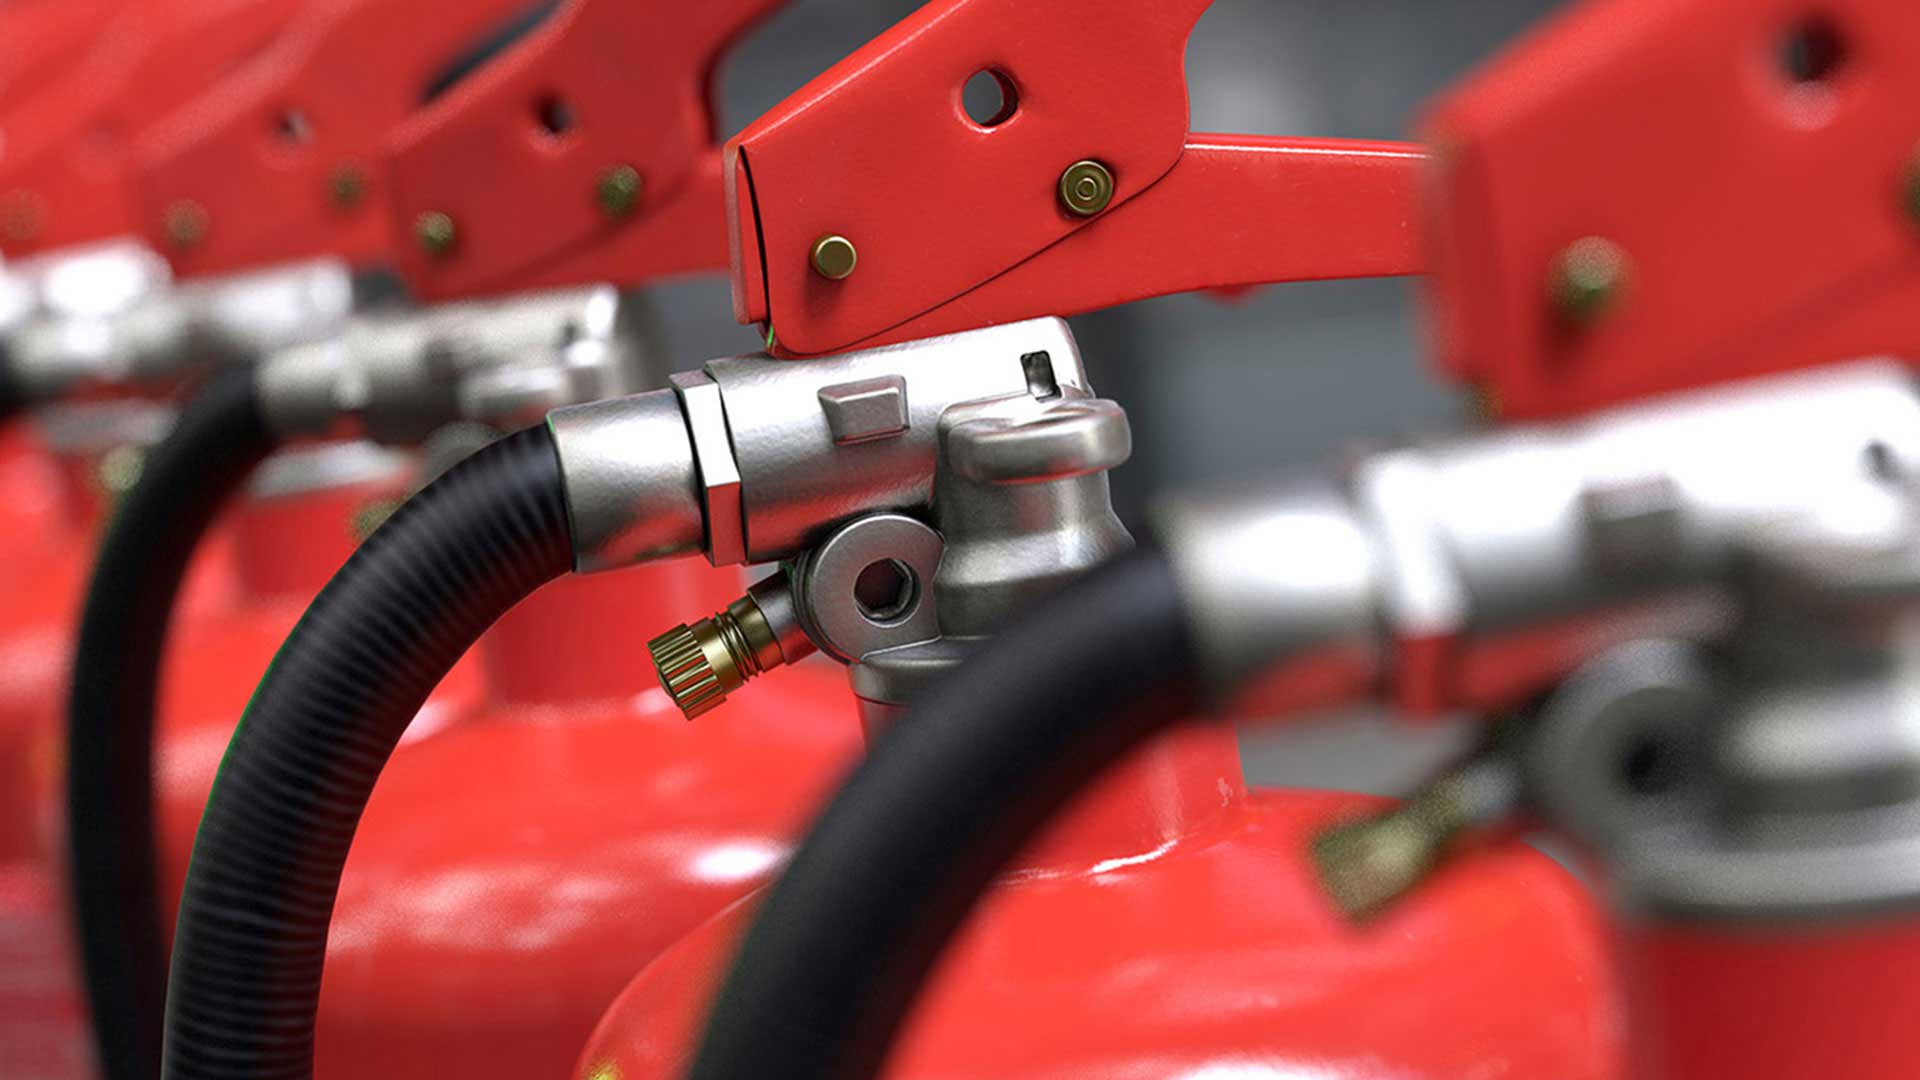 Pila de extintores en linea, close up de extintores